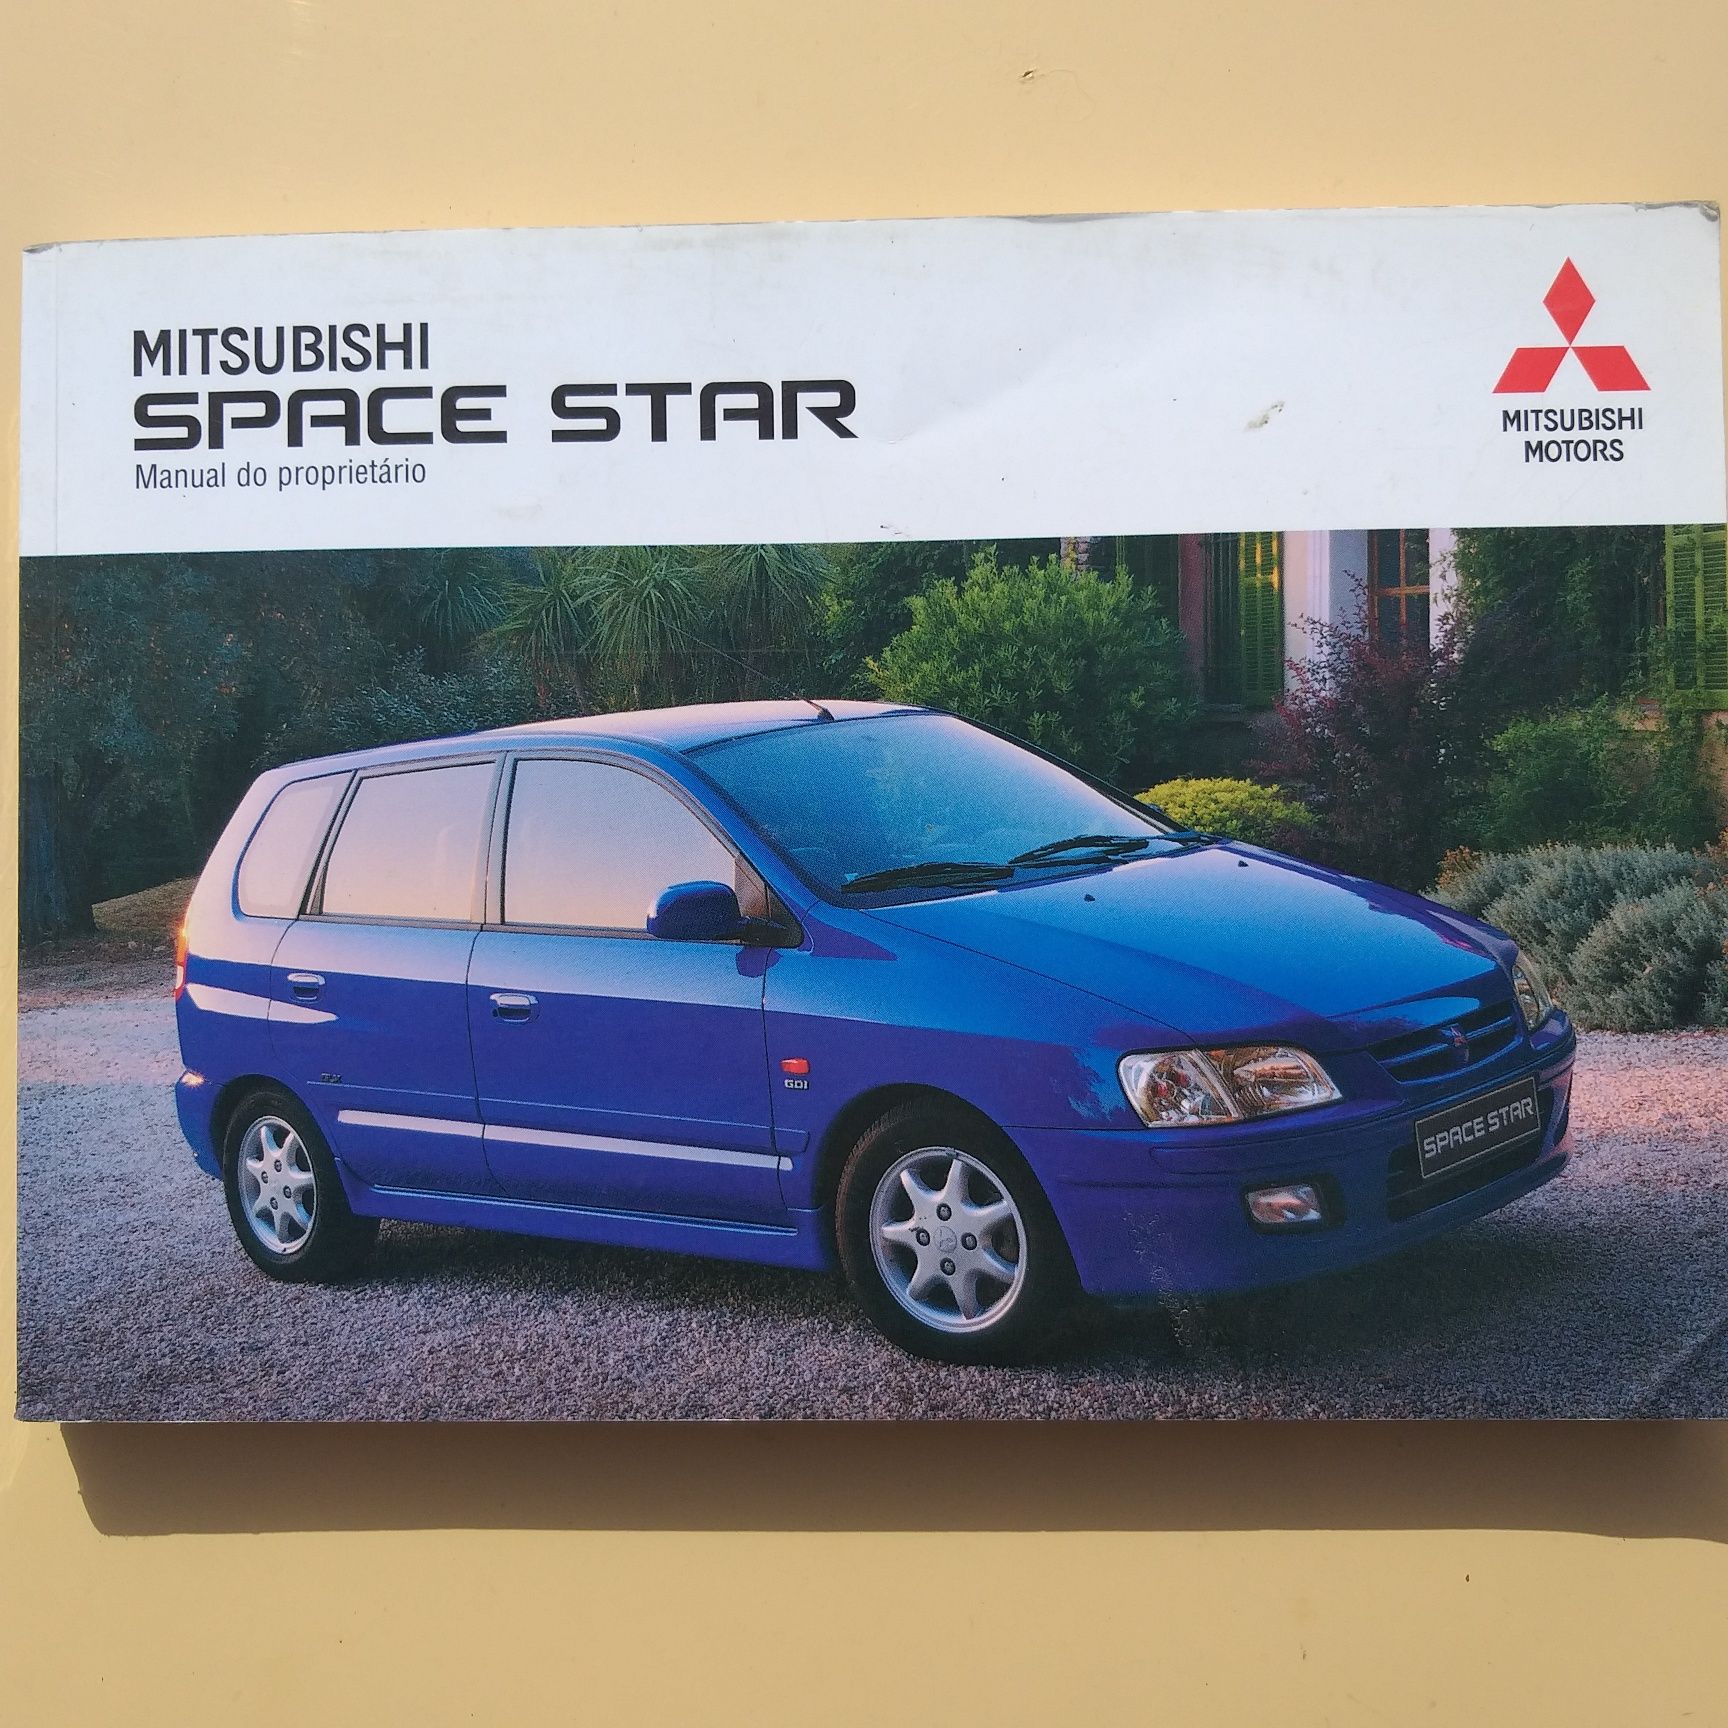 Mitsubishi Space Star manual do proprietário